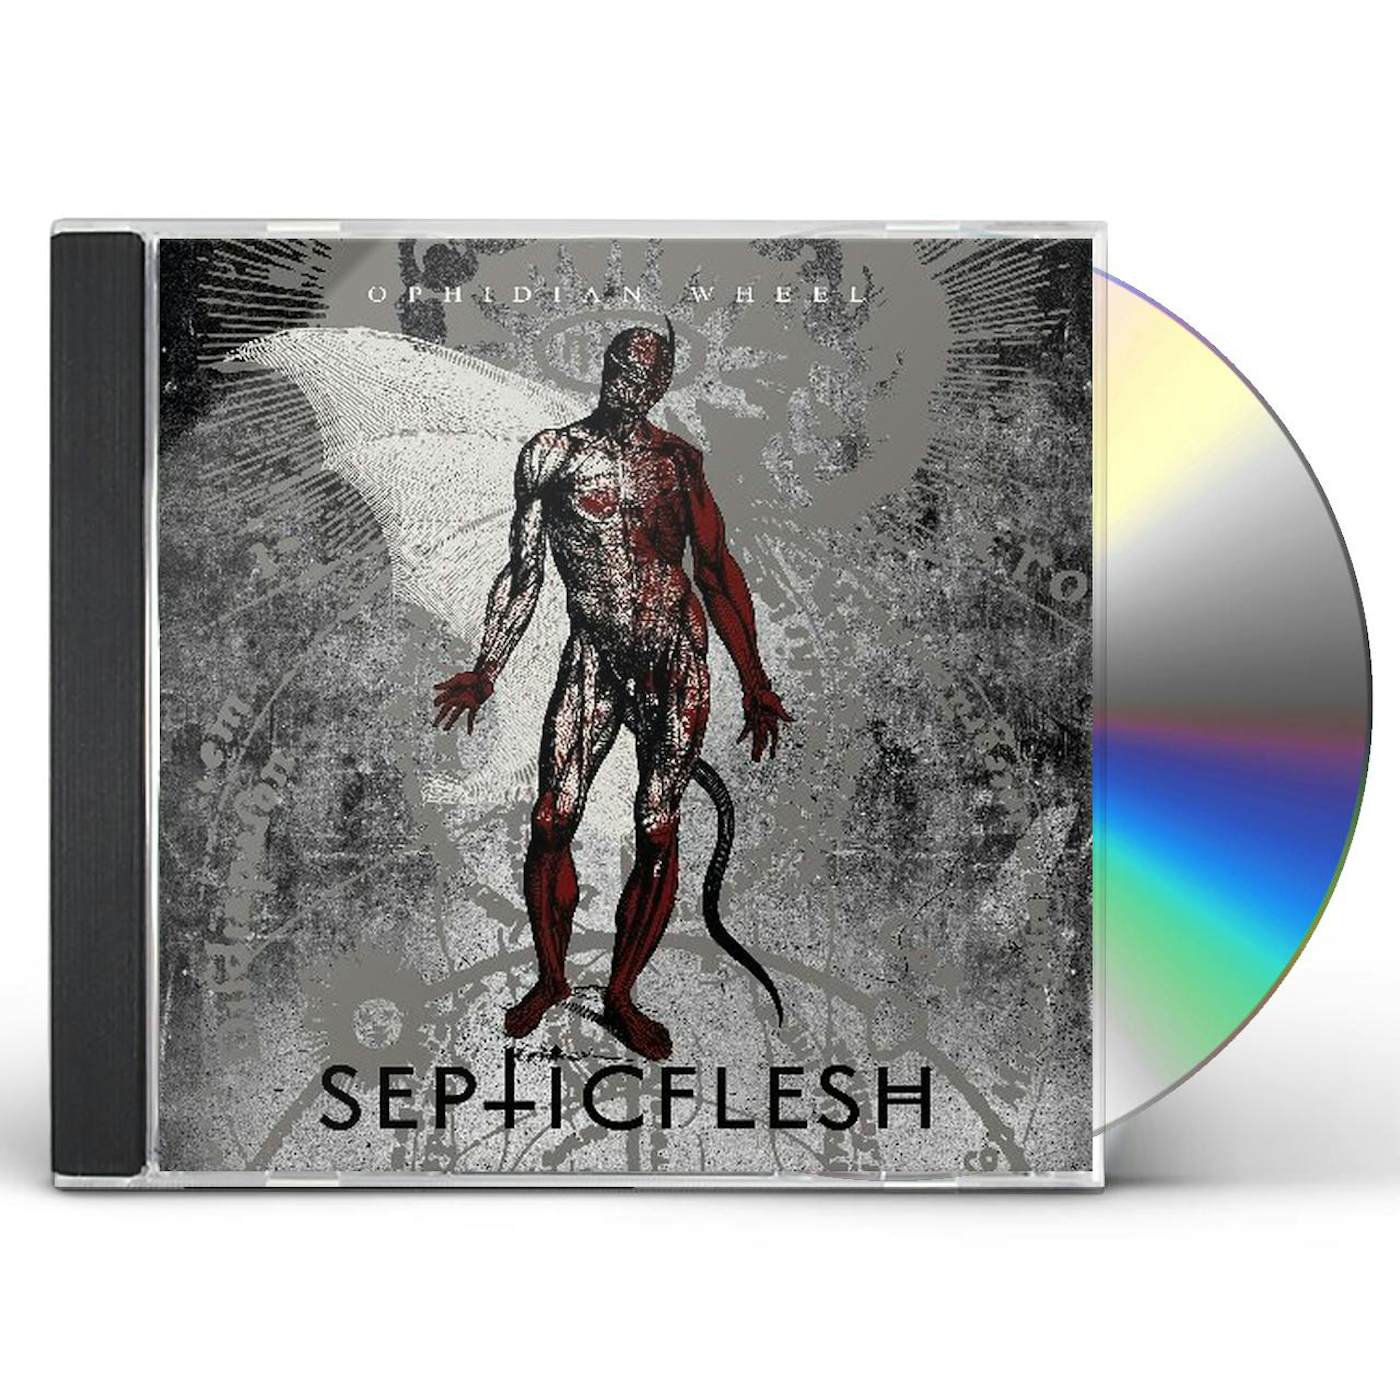 Septicflesh OPHIDIAN WHEEL CD